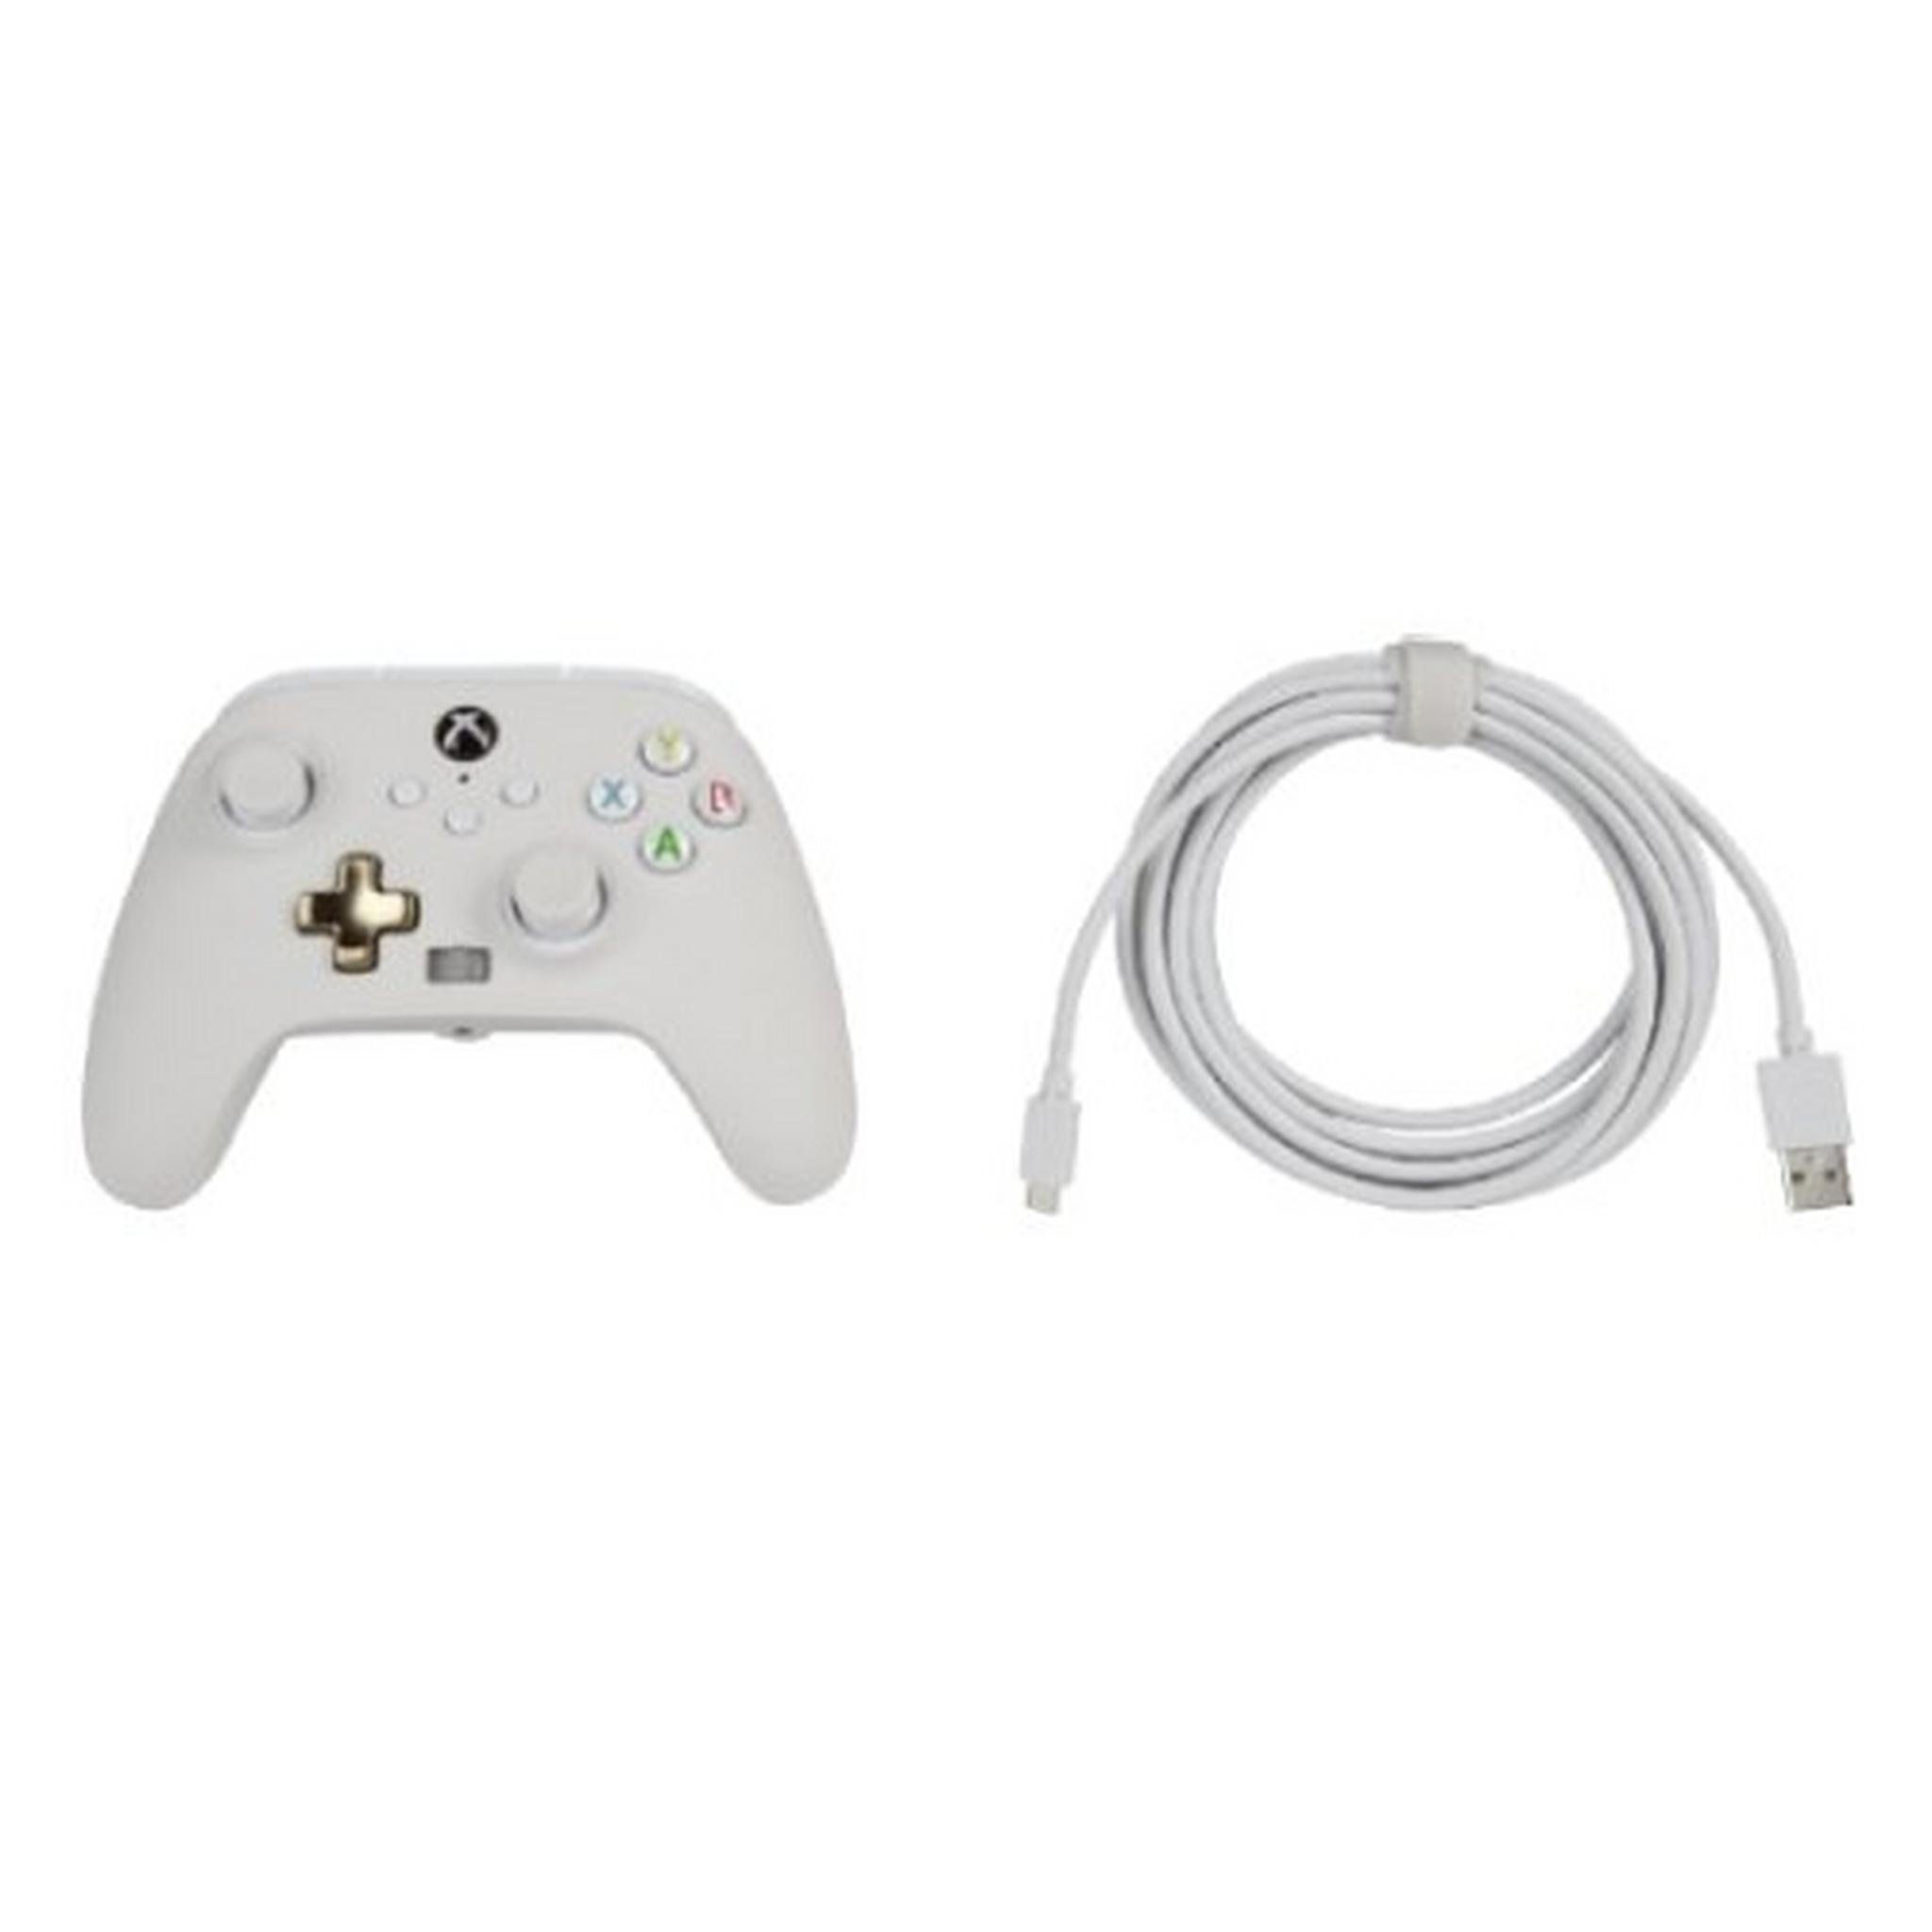 PowerA Enhanced Xbox Series X|S Wired Controller - Mist